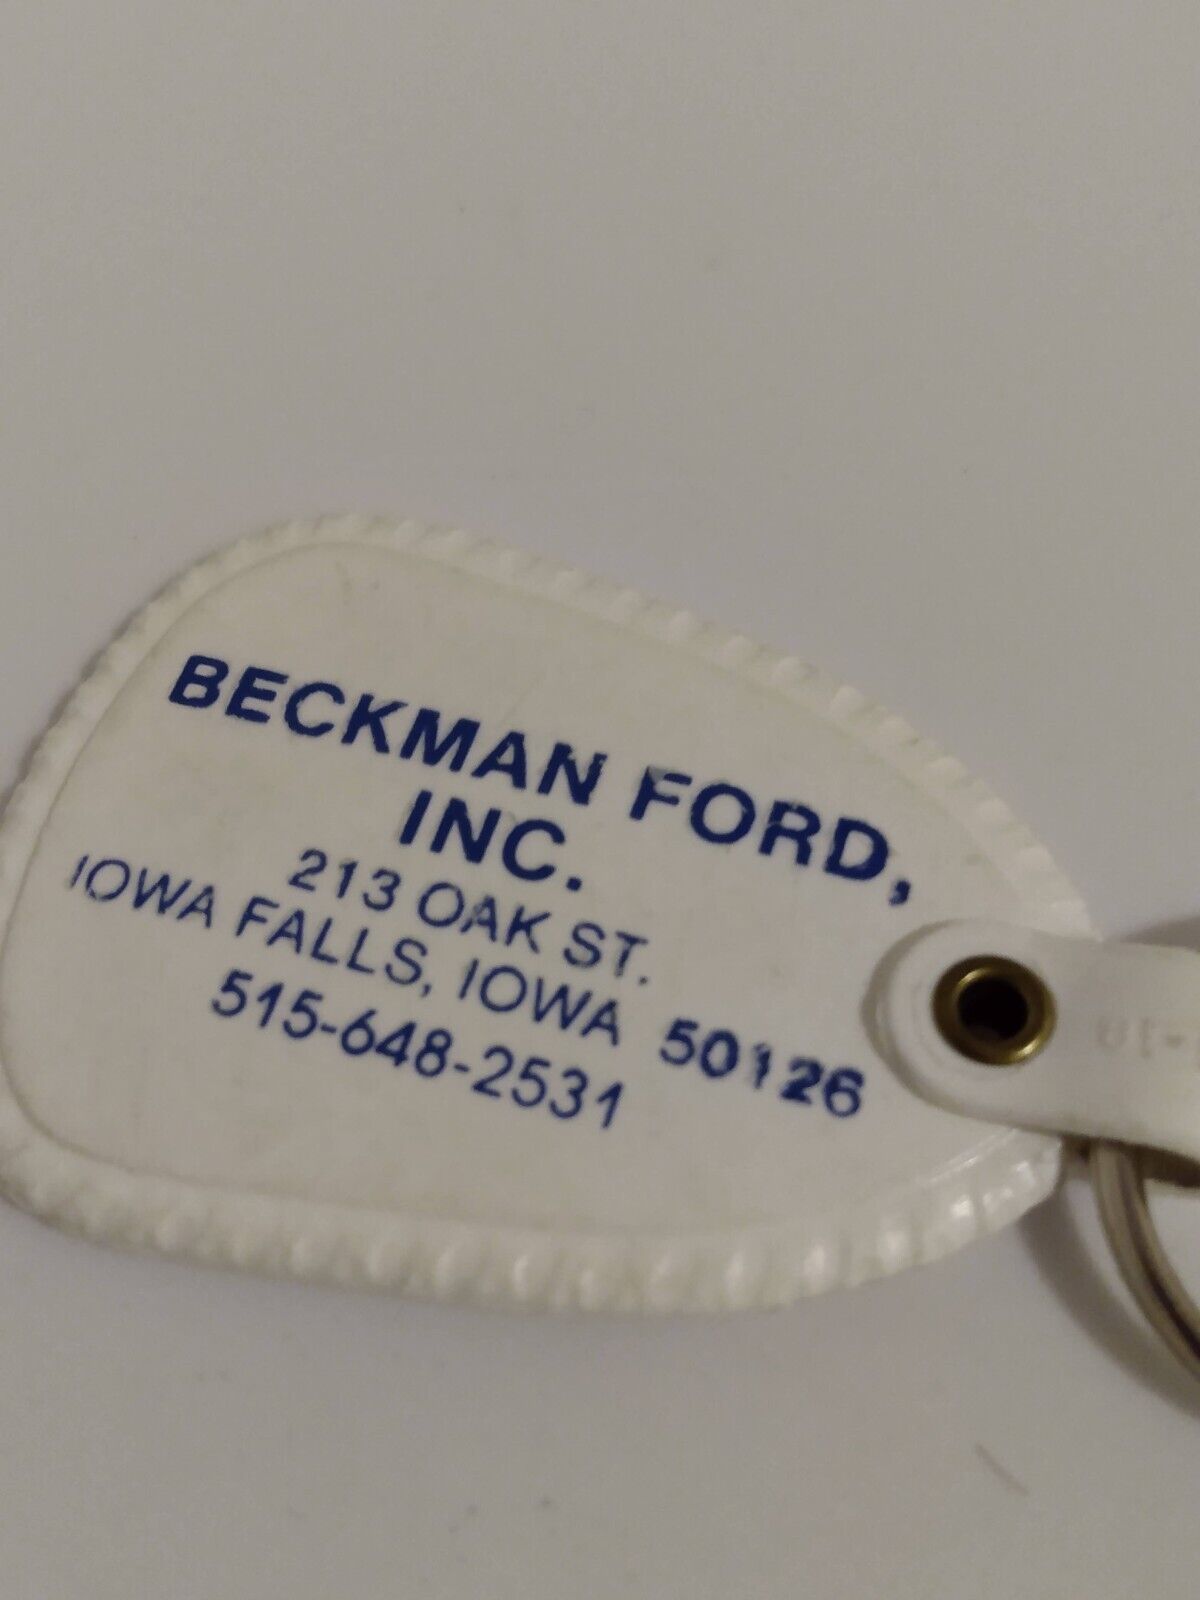 Beckman Ford Iowa Falls IA Promo Keyring